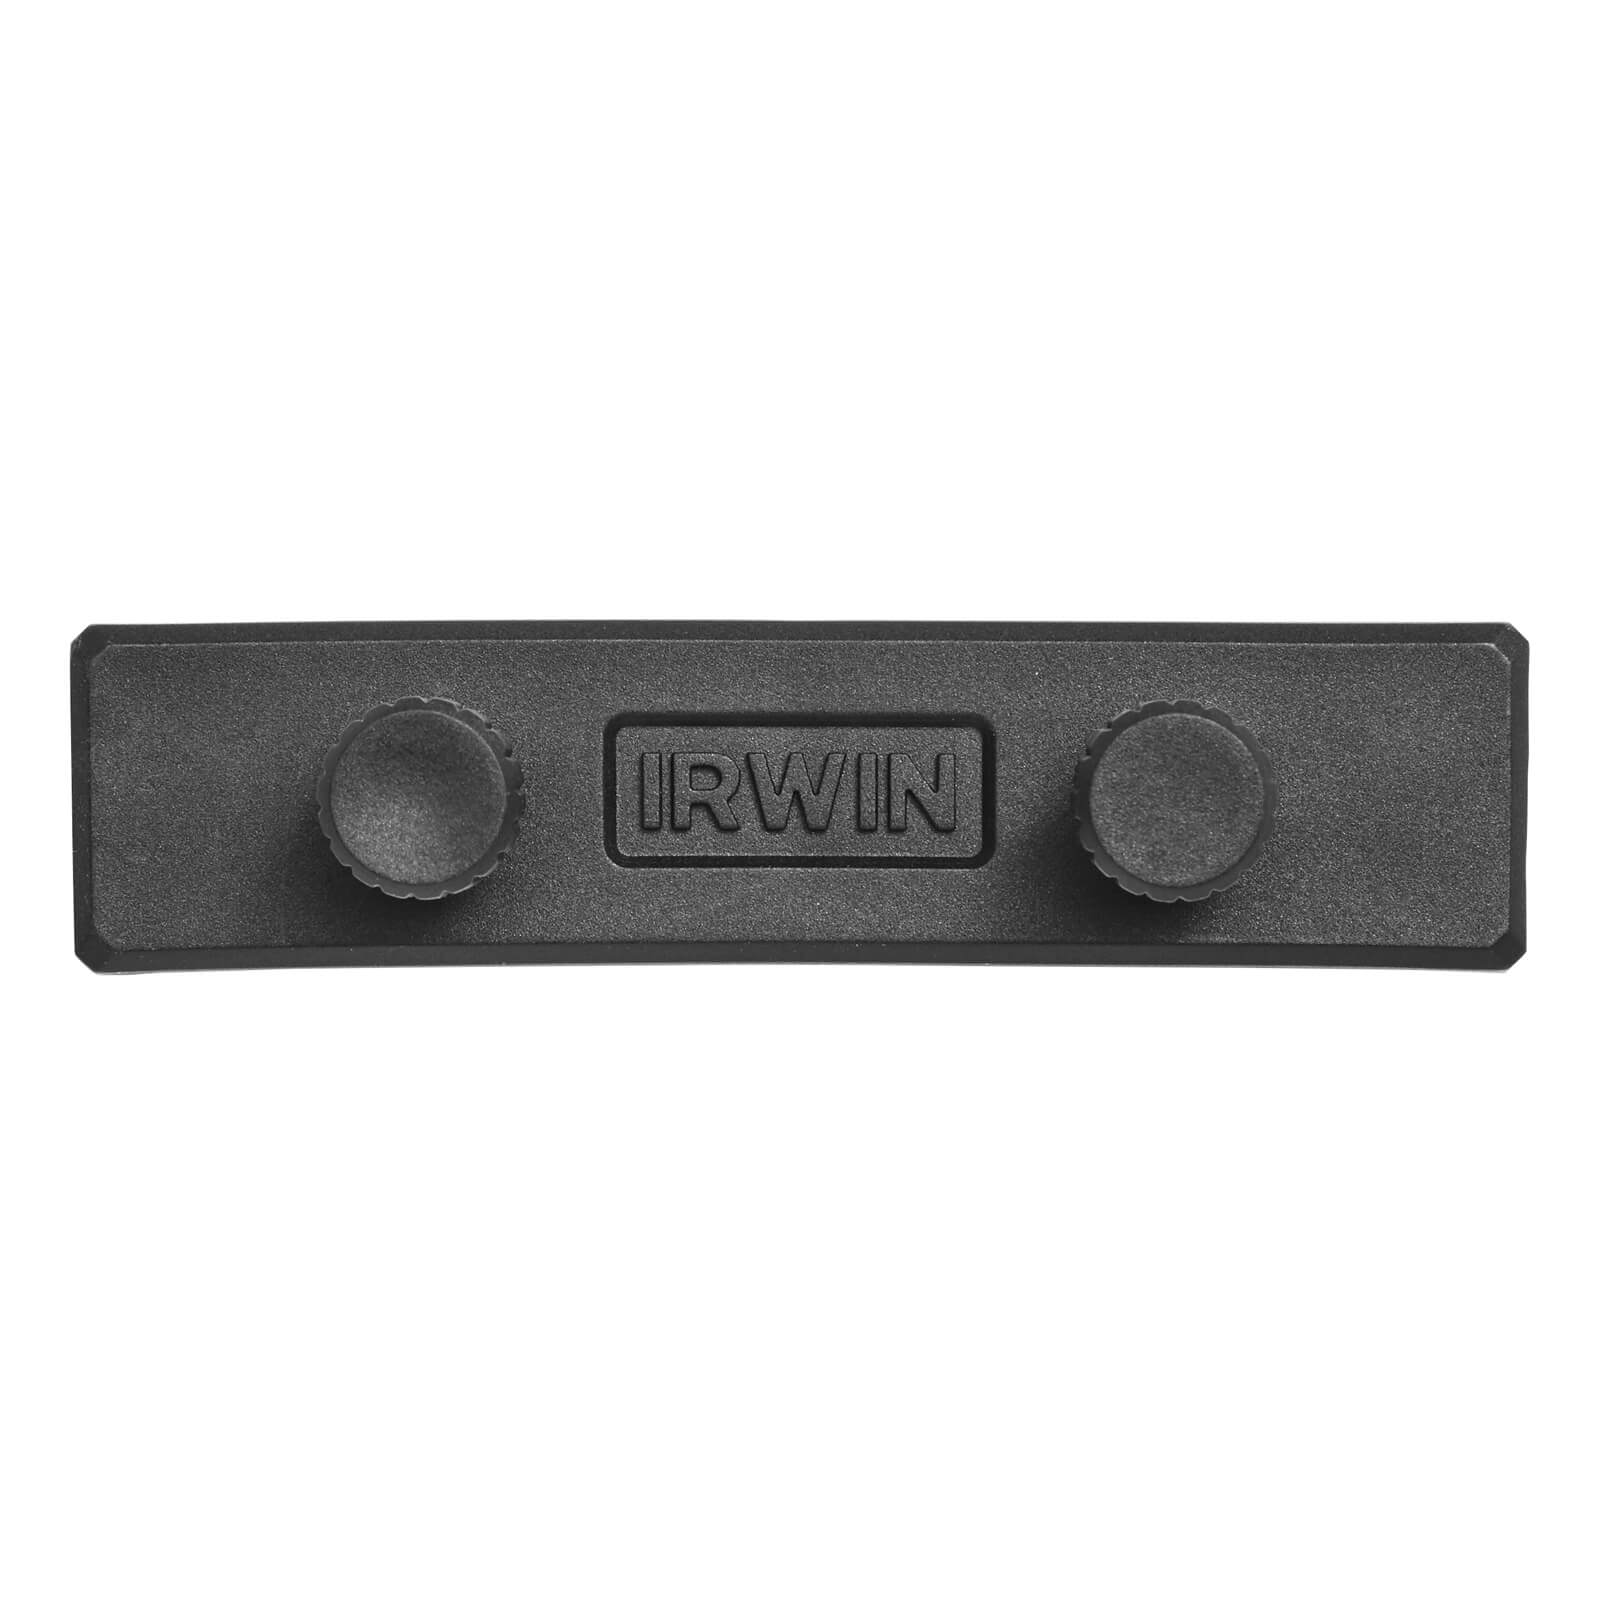 IRWIN Coupler Kit Accessory